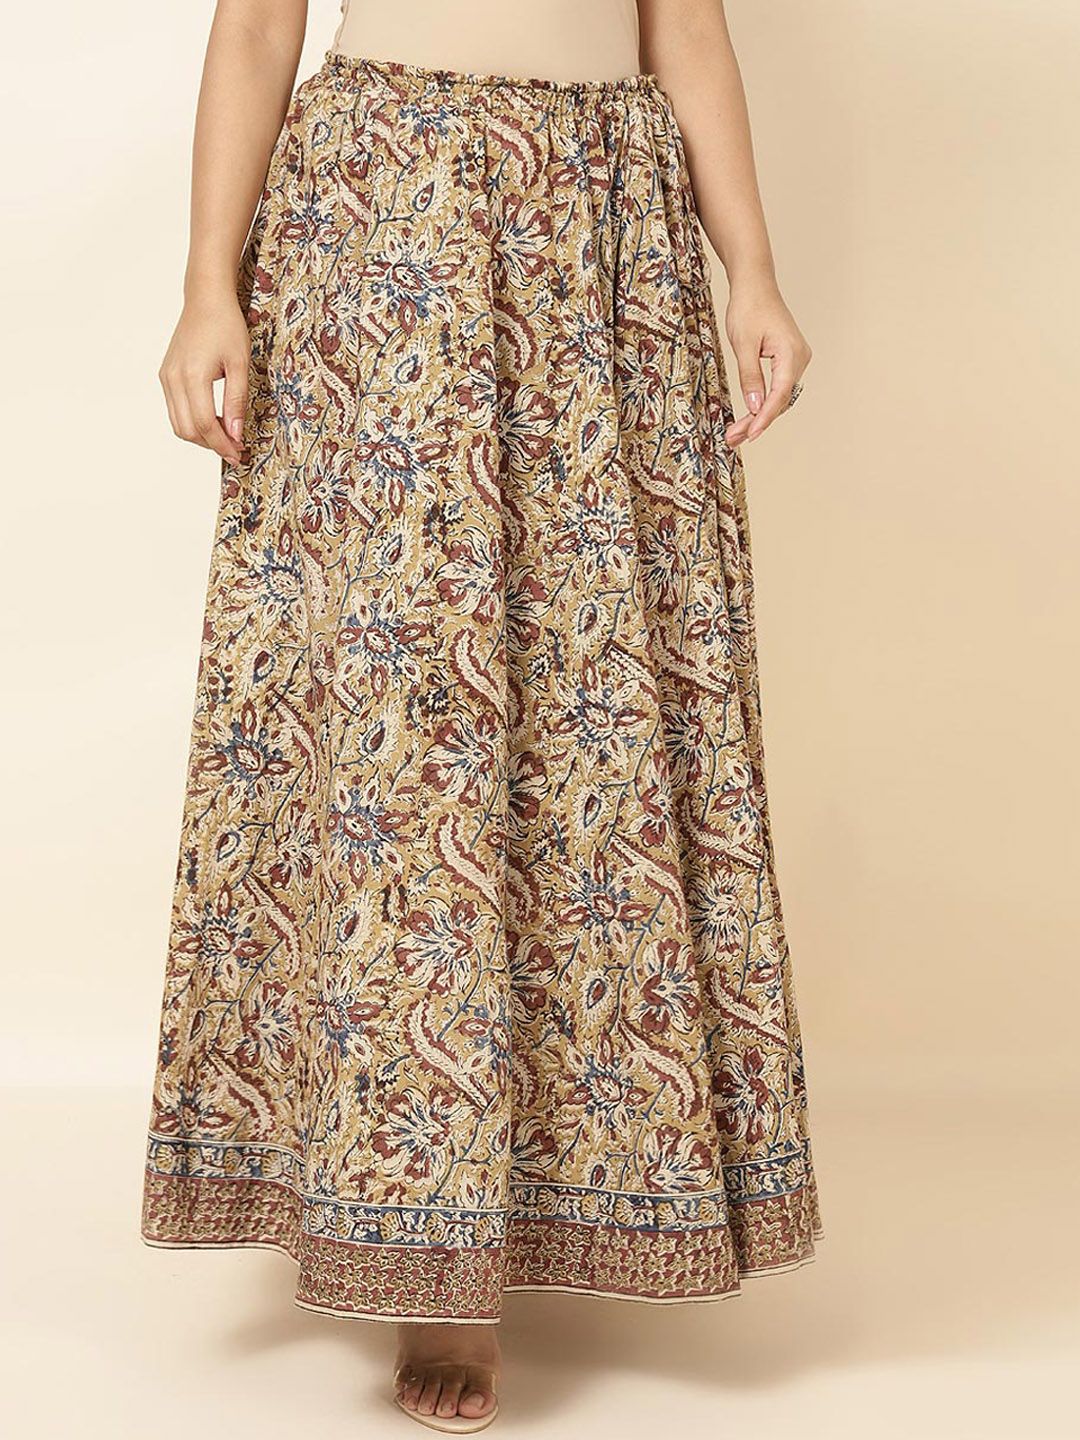 Fabindia Ethnic Motifs Printed Maxi-Length Cotton Skirts Price in India